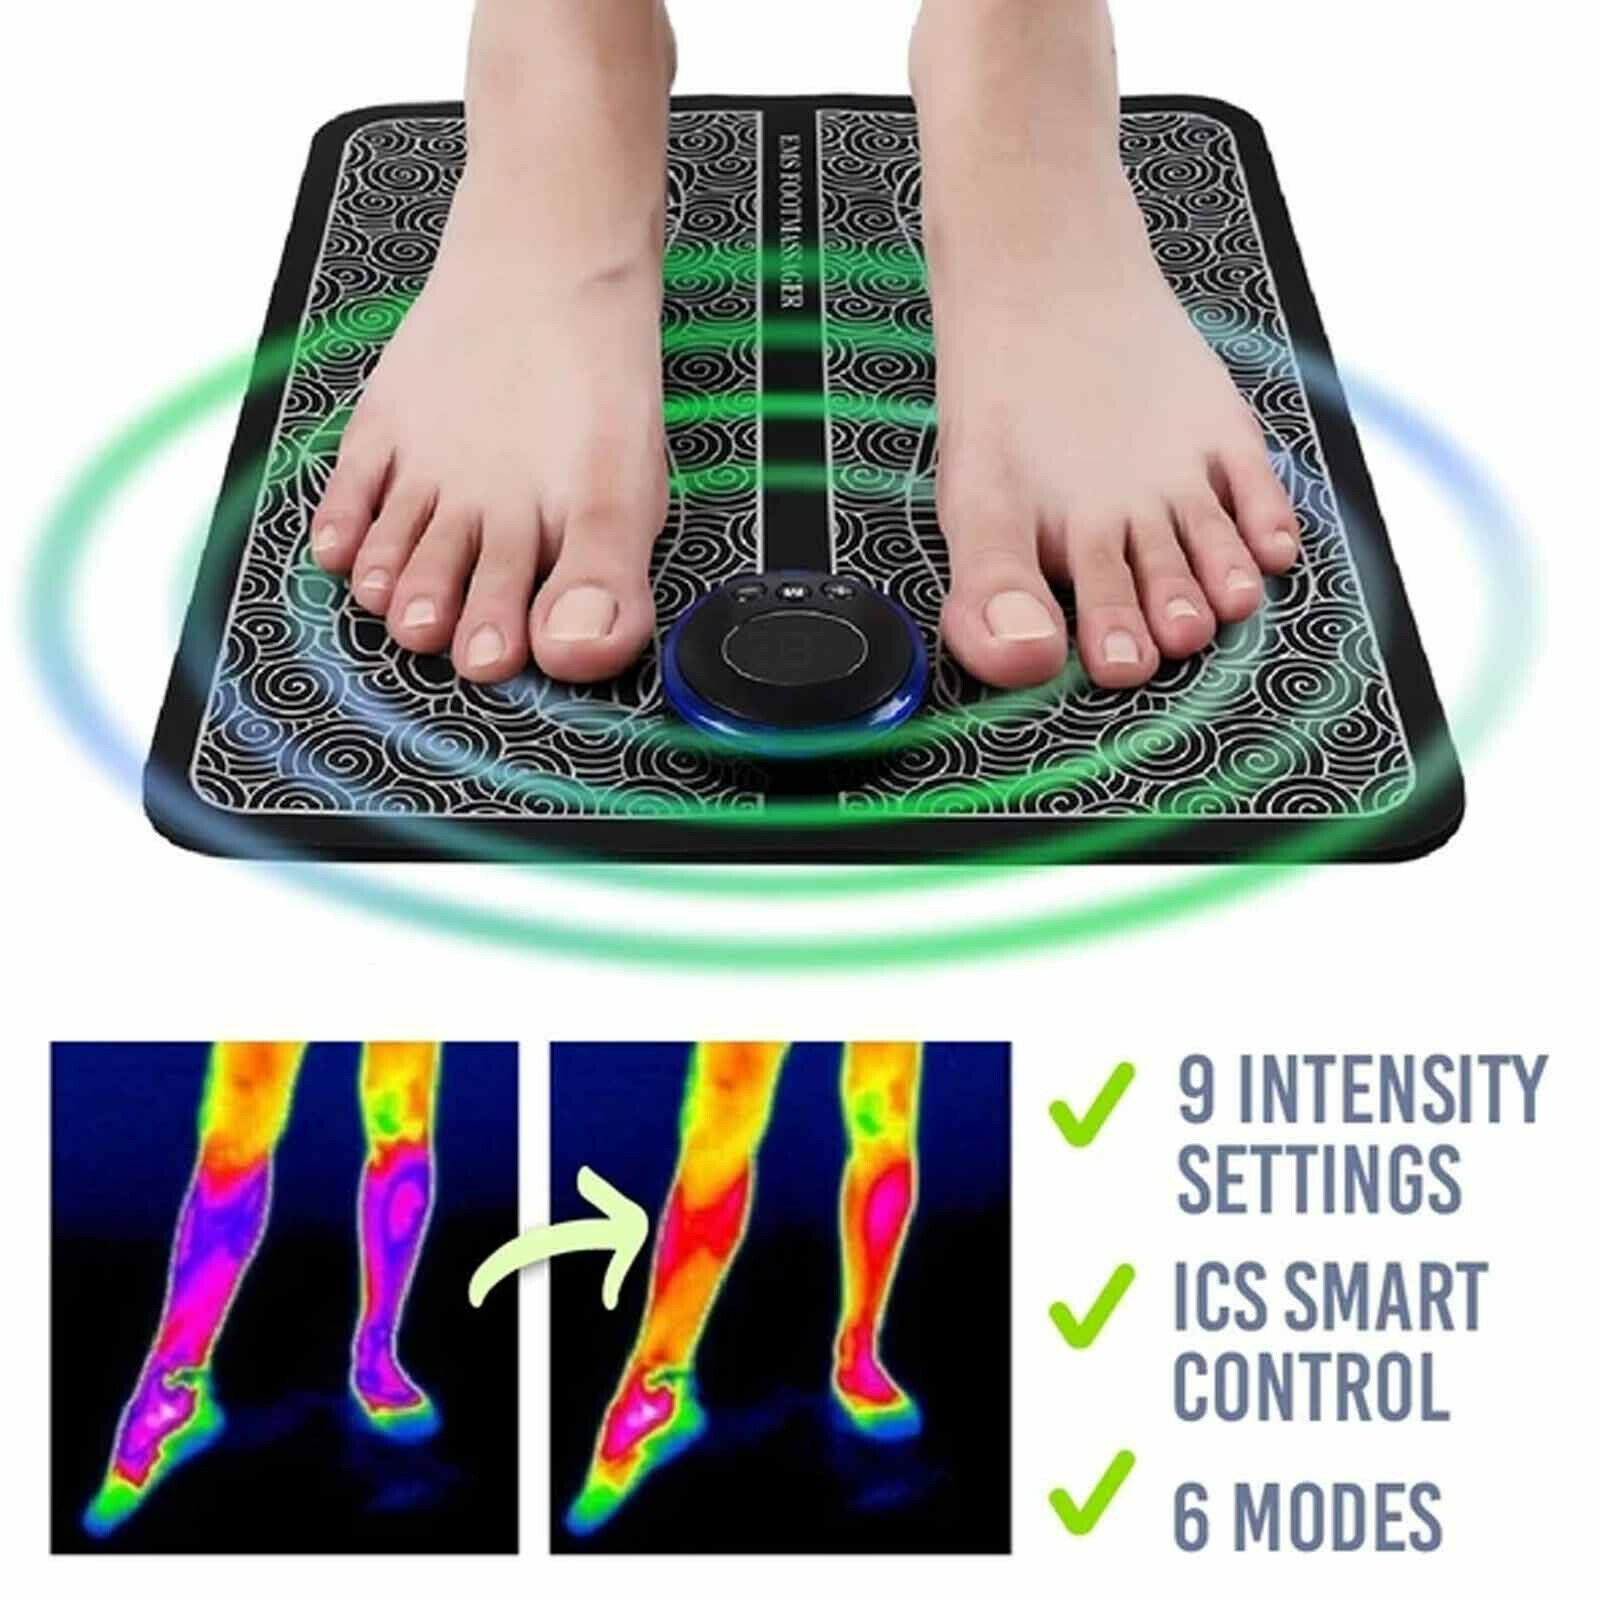 Leg Reshaping Foot Massager Foot Muscle Stim Pro Massage High Quality